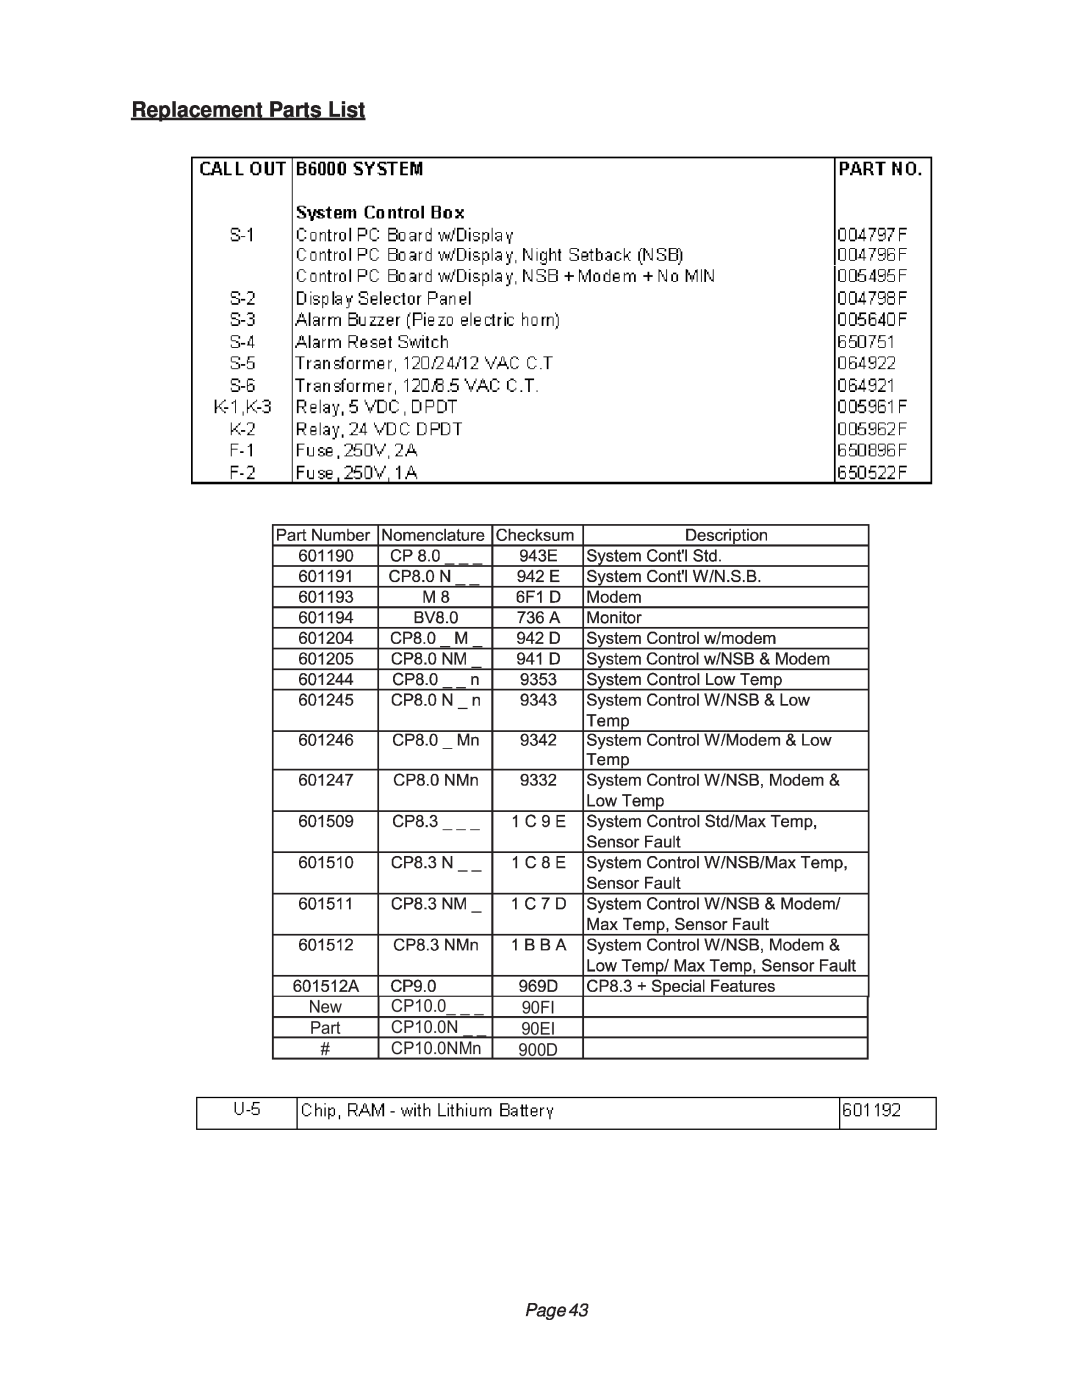 Raypak B6000 manual Replacement Parts List, 90FI, 90EI, CP10.0NMn, 900D 